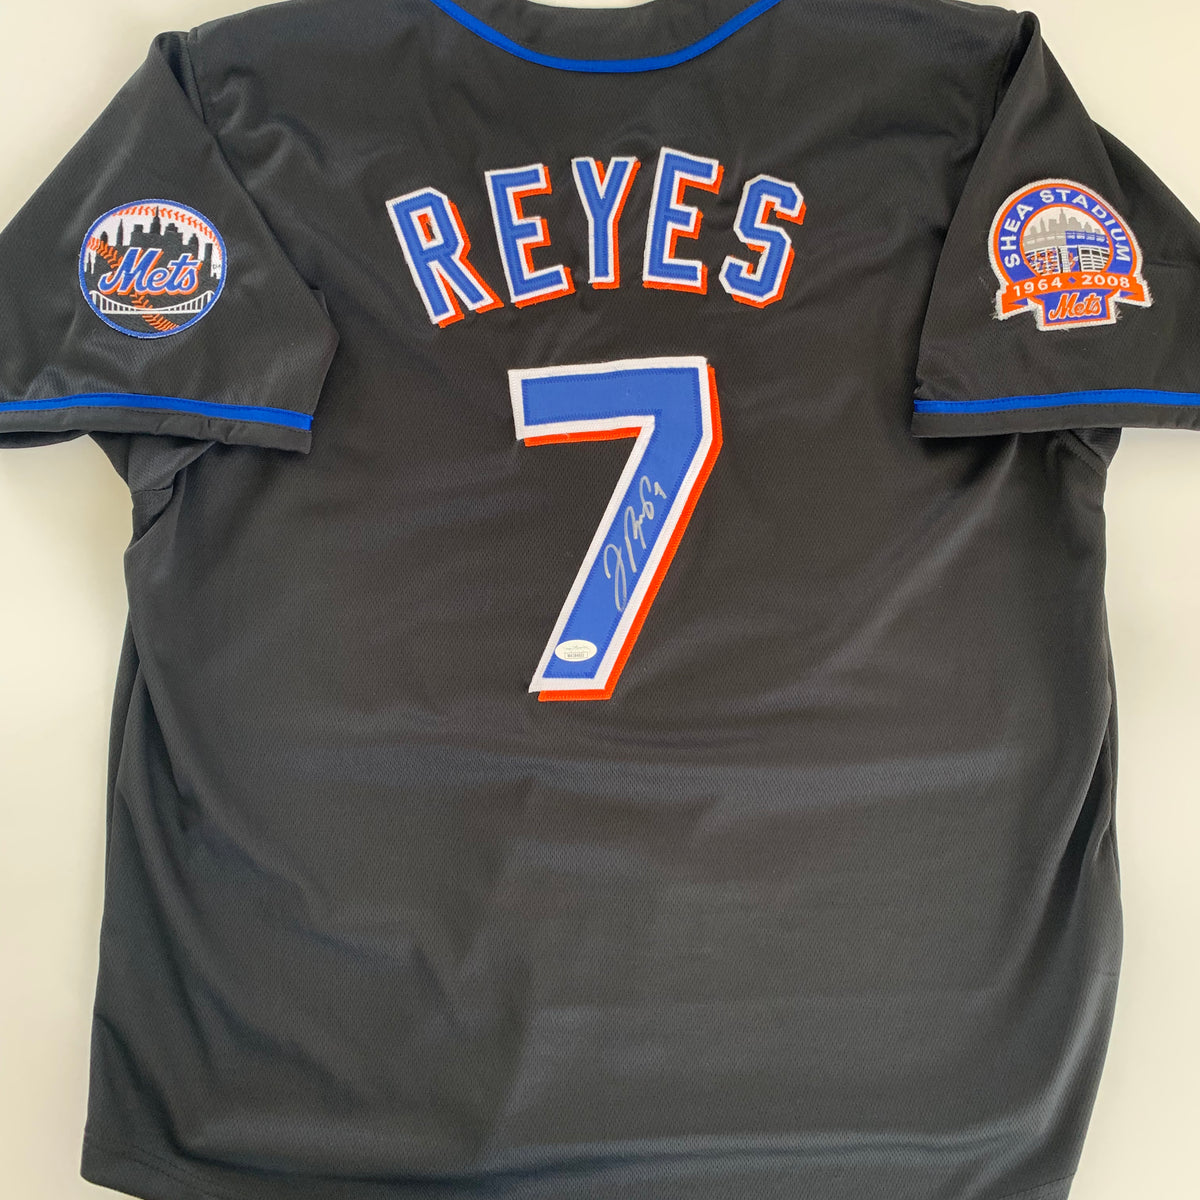 Jose Reyes Signed Mets Majestic Jersey Inscribed Jossse Jose Jose Jossse